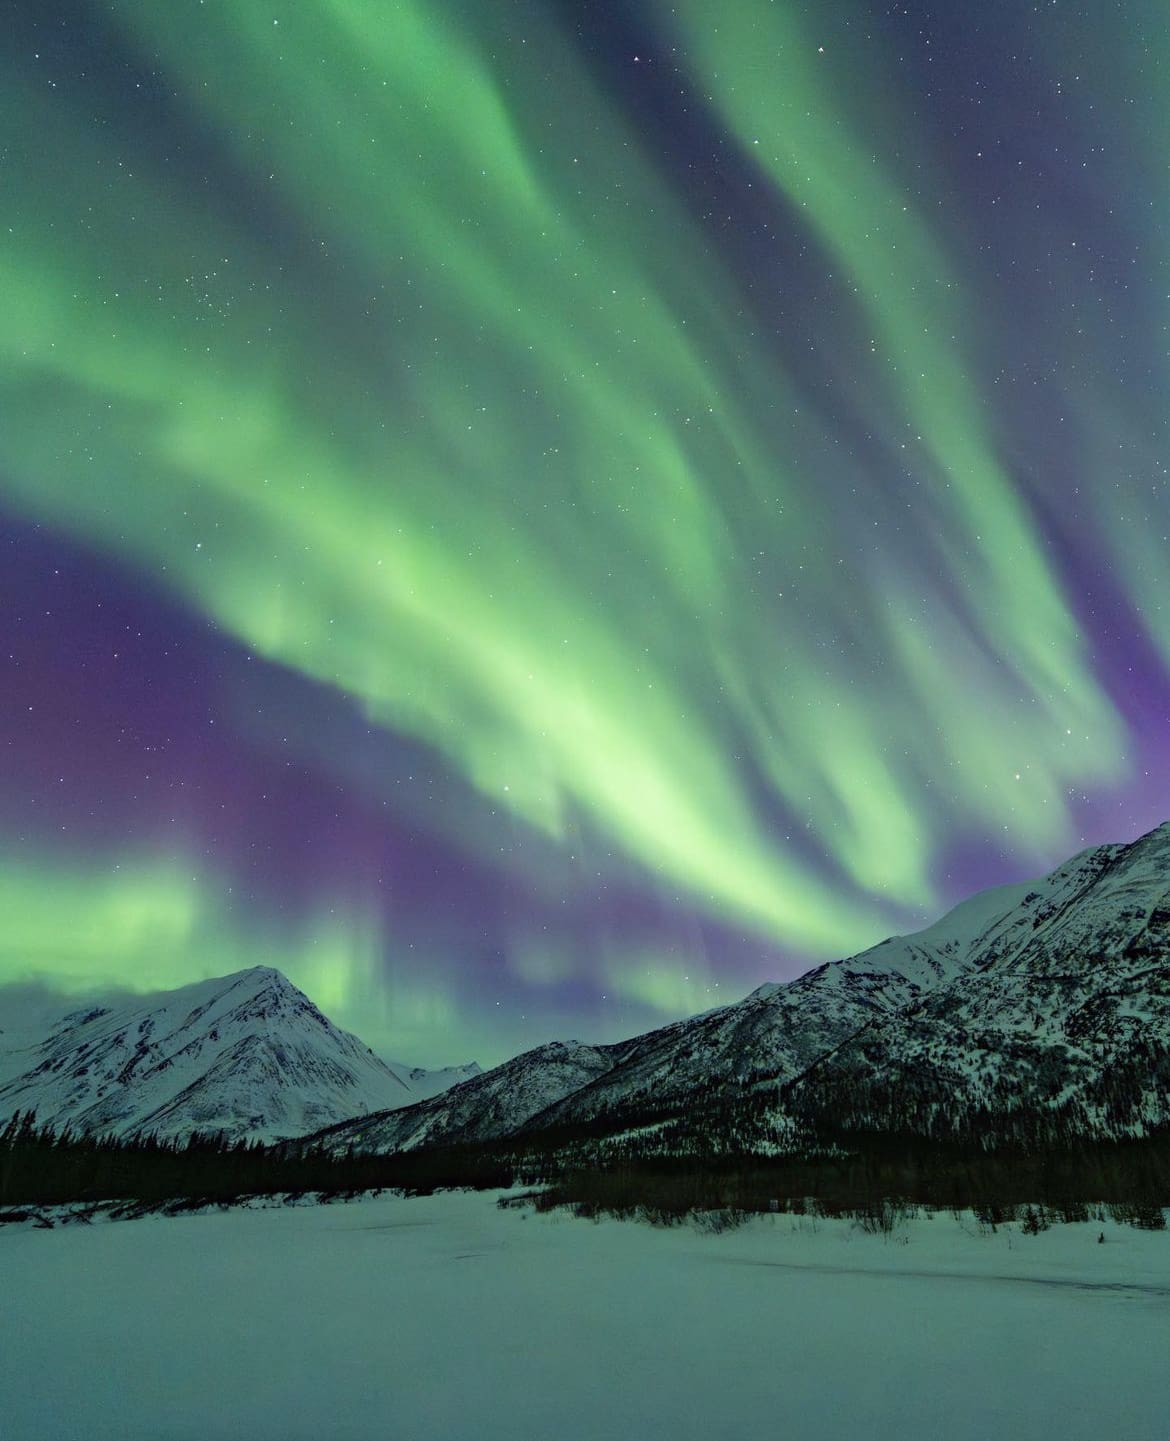 Magical aurora over mountains in Alaska